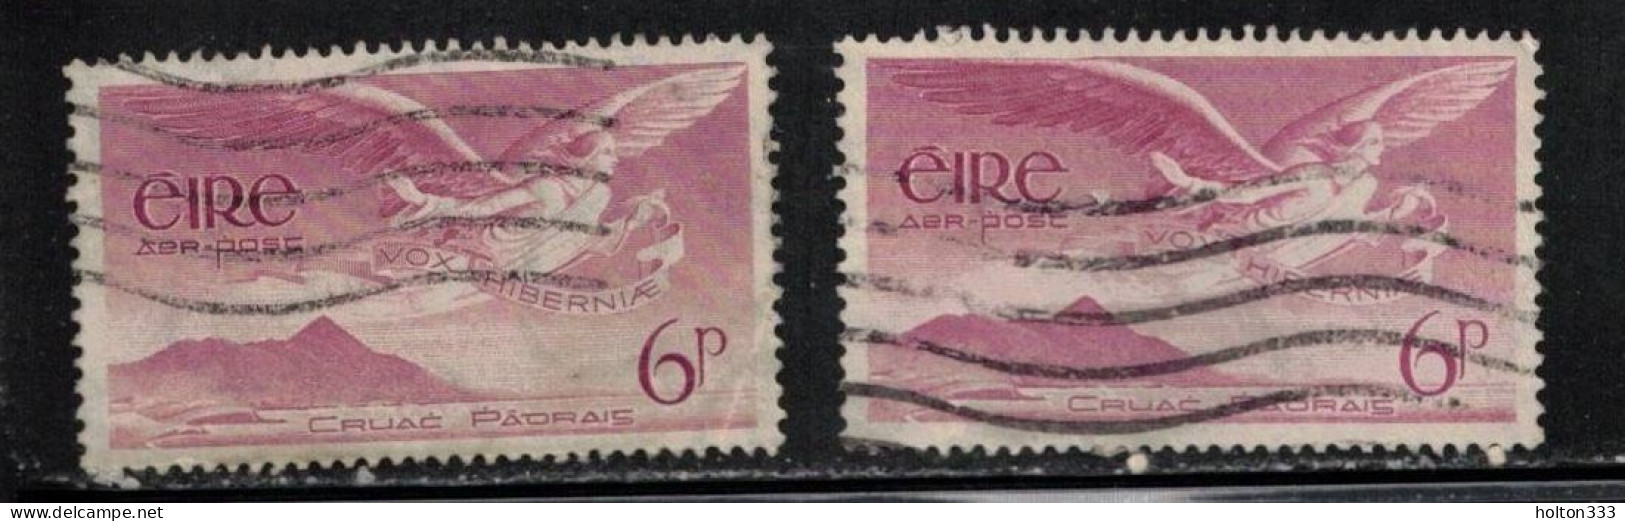 IRELAND Scott # C3 Used X 2 - Airmails - Used Stamps